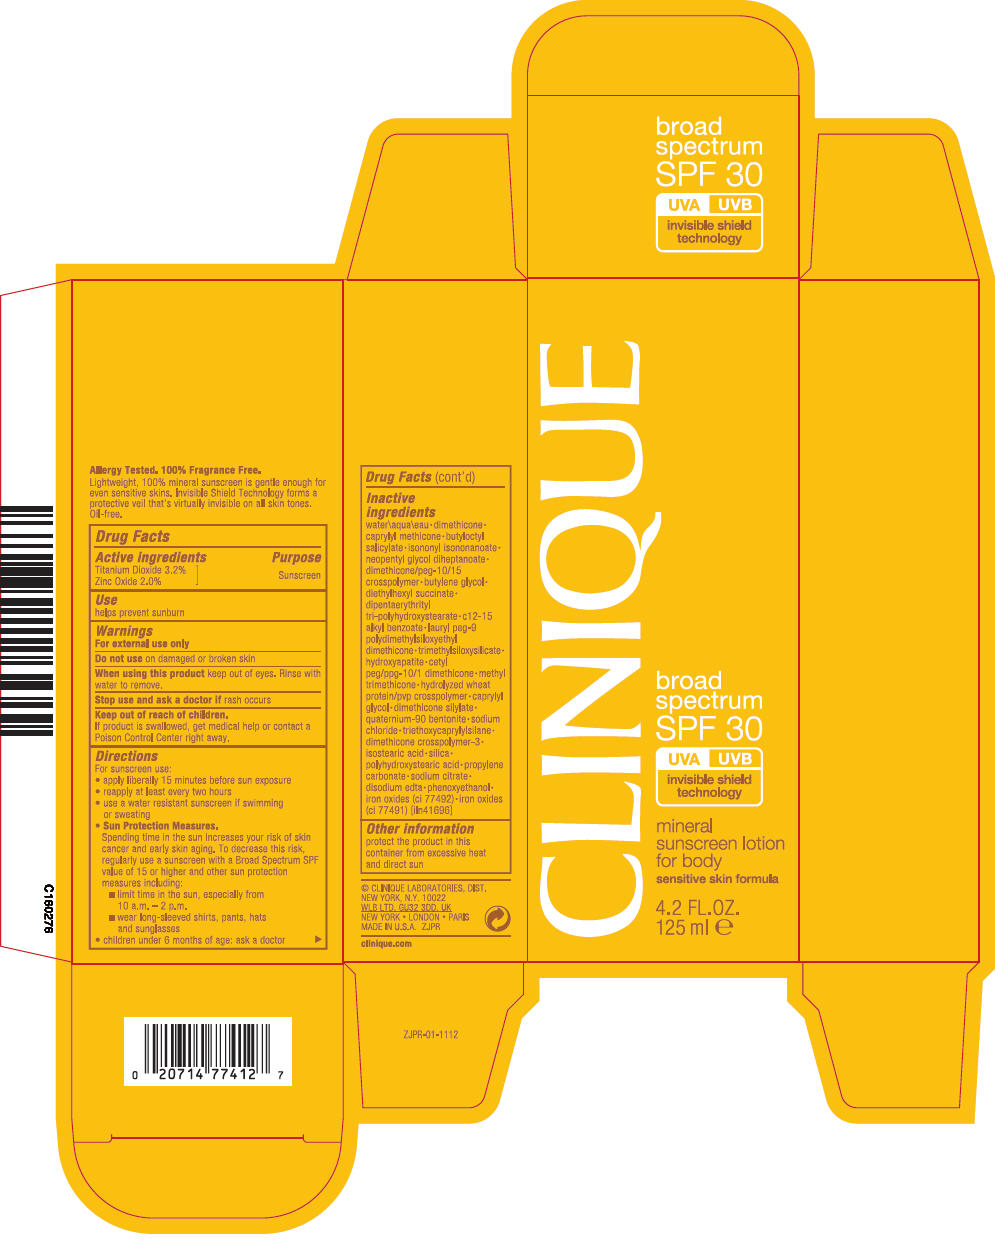 PRINCIPAL DISPLAY PANEL - 125 ml Bottle Carton